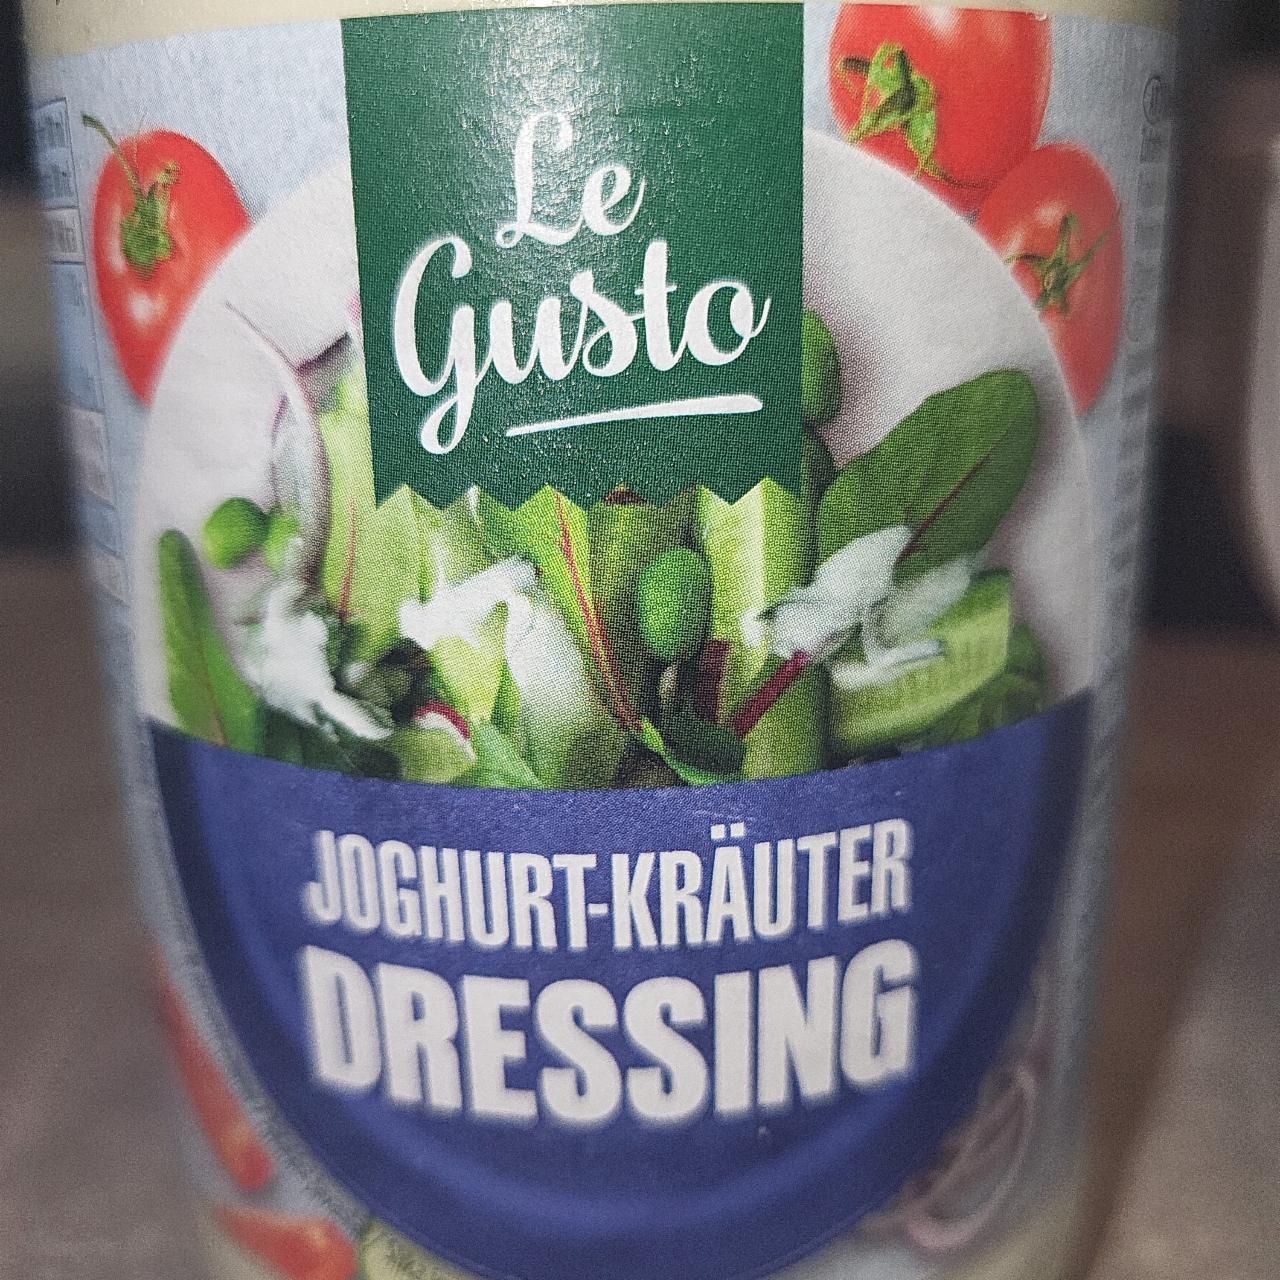 Fotografie - Joghurt-Kräuter Dressing Le Gusto